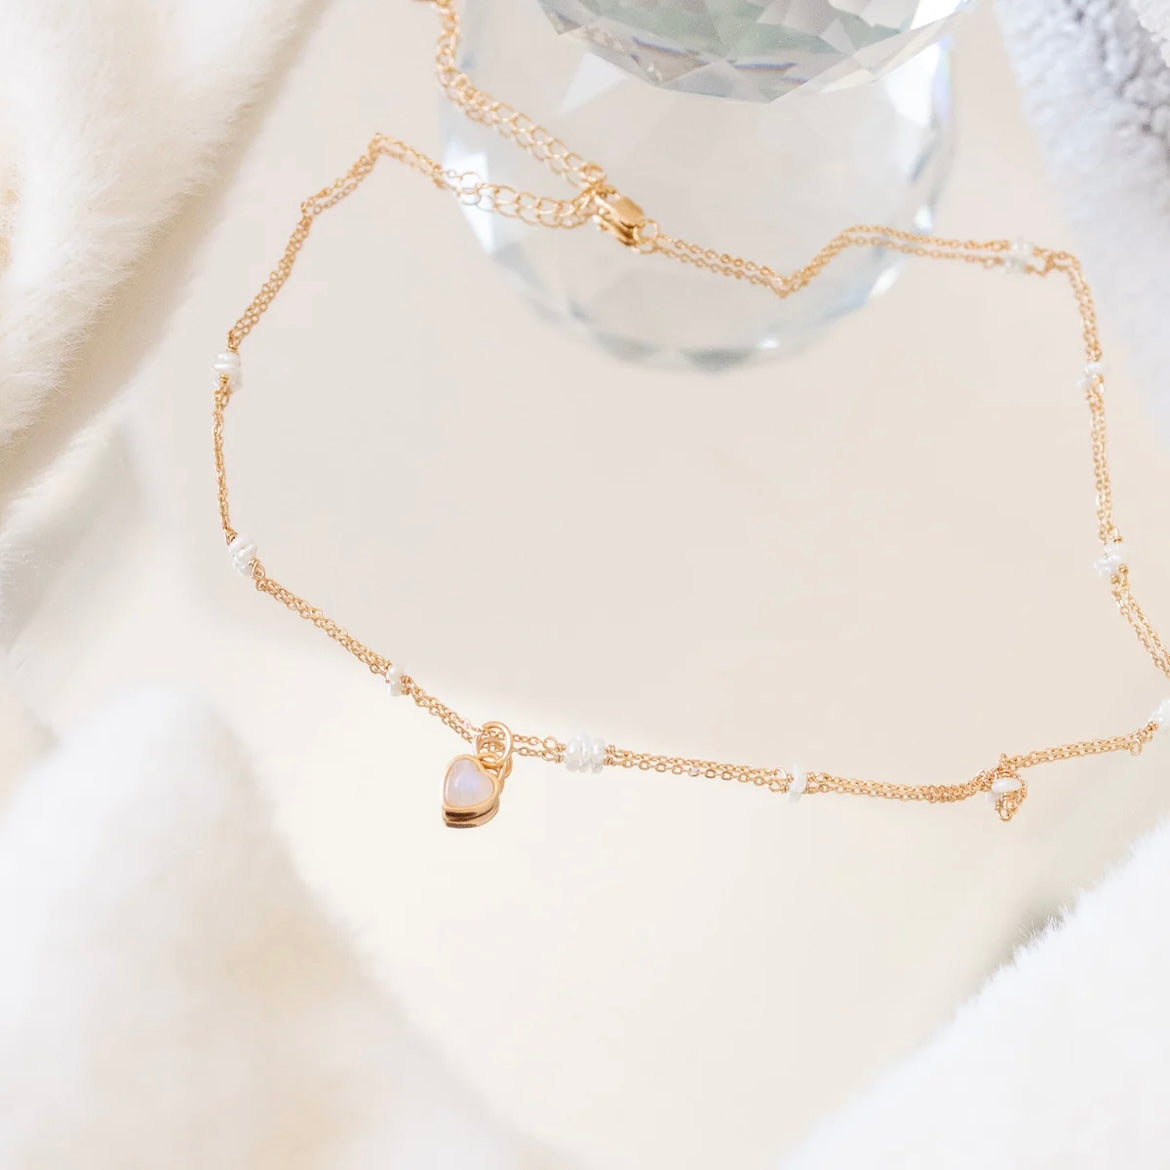 Moonheart Locket Necklace Gold - 3 ways wearing